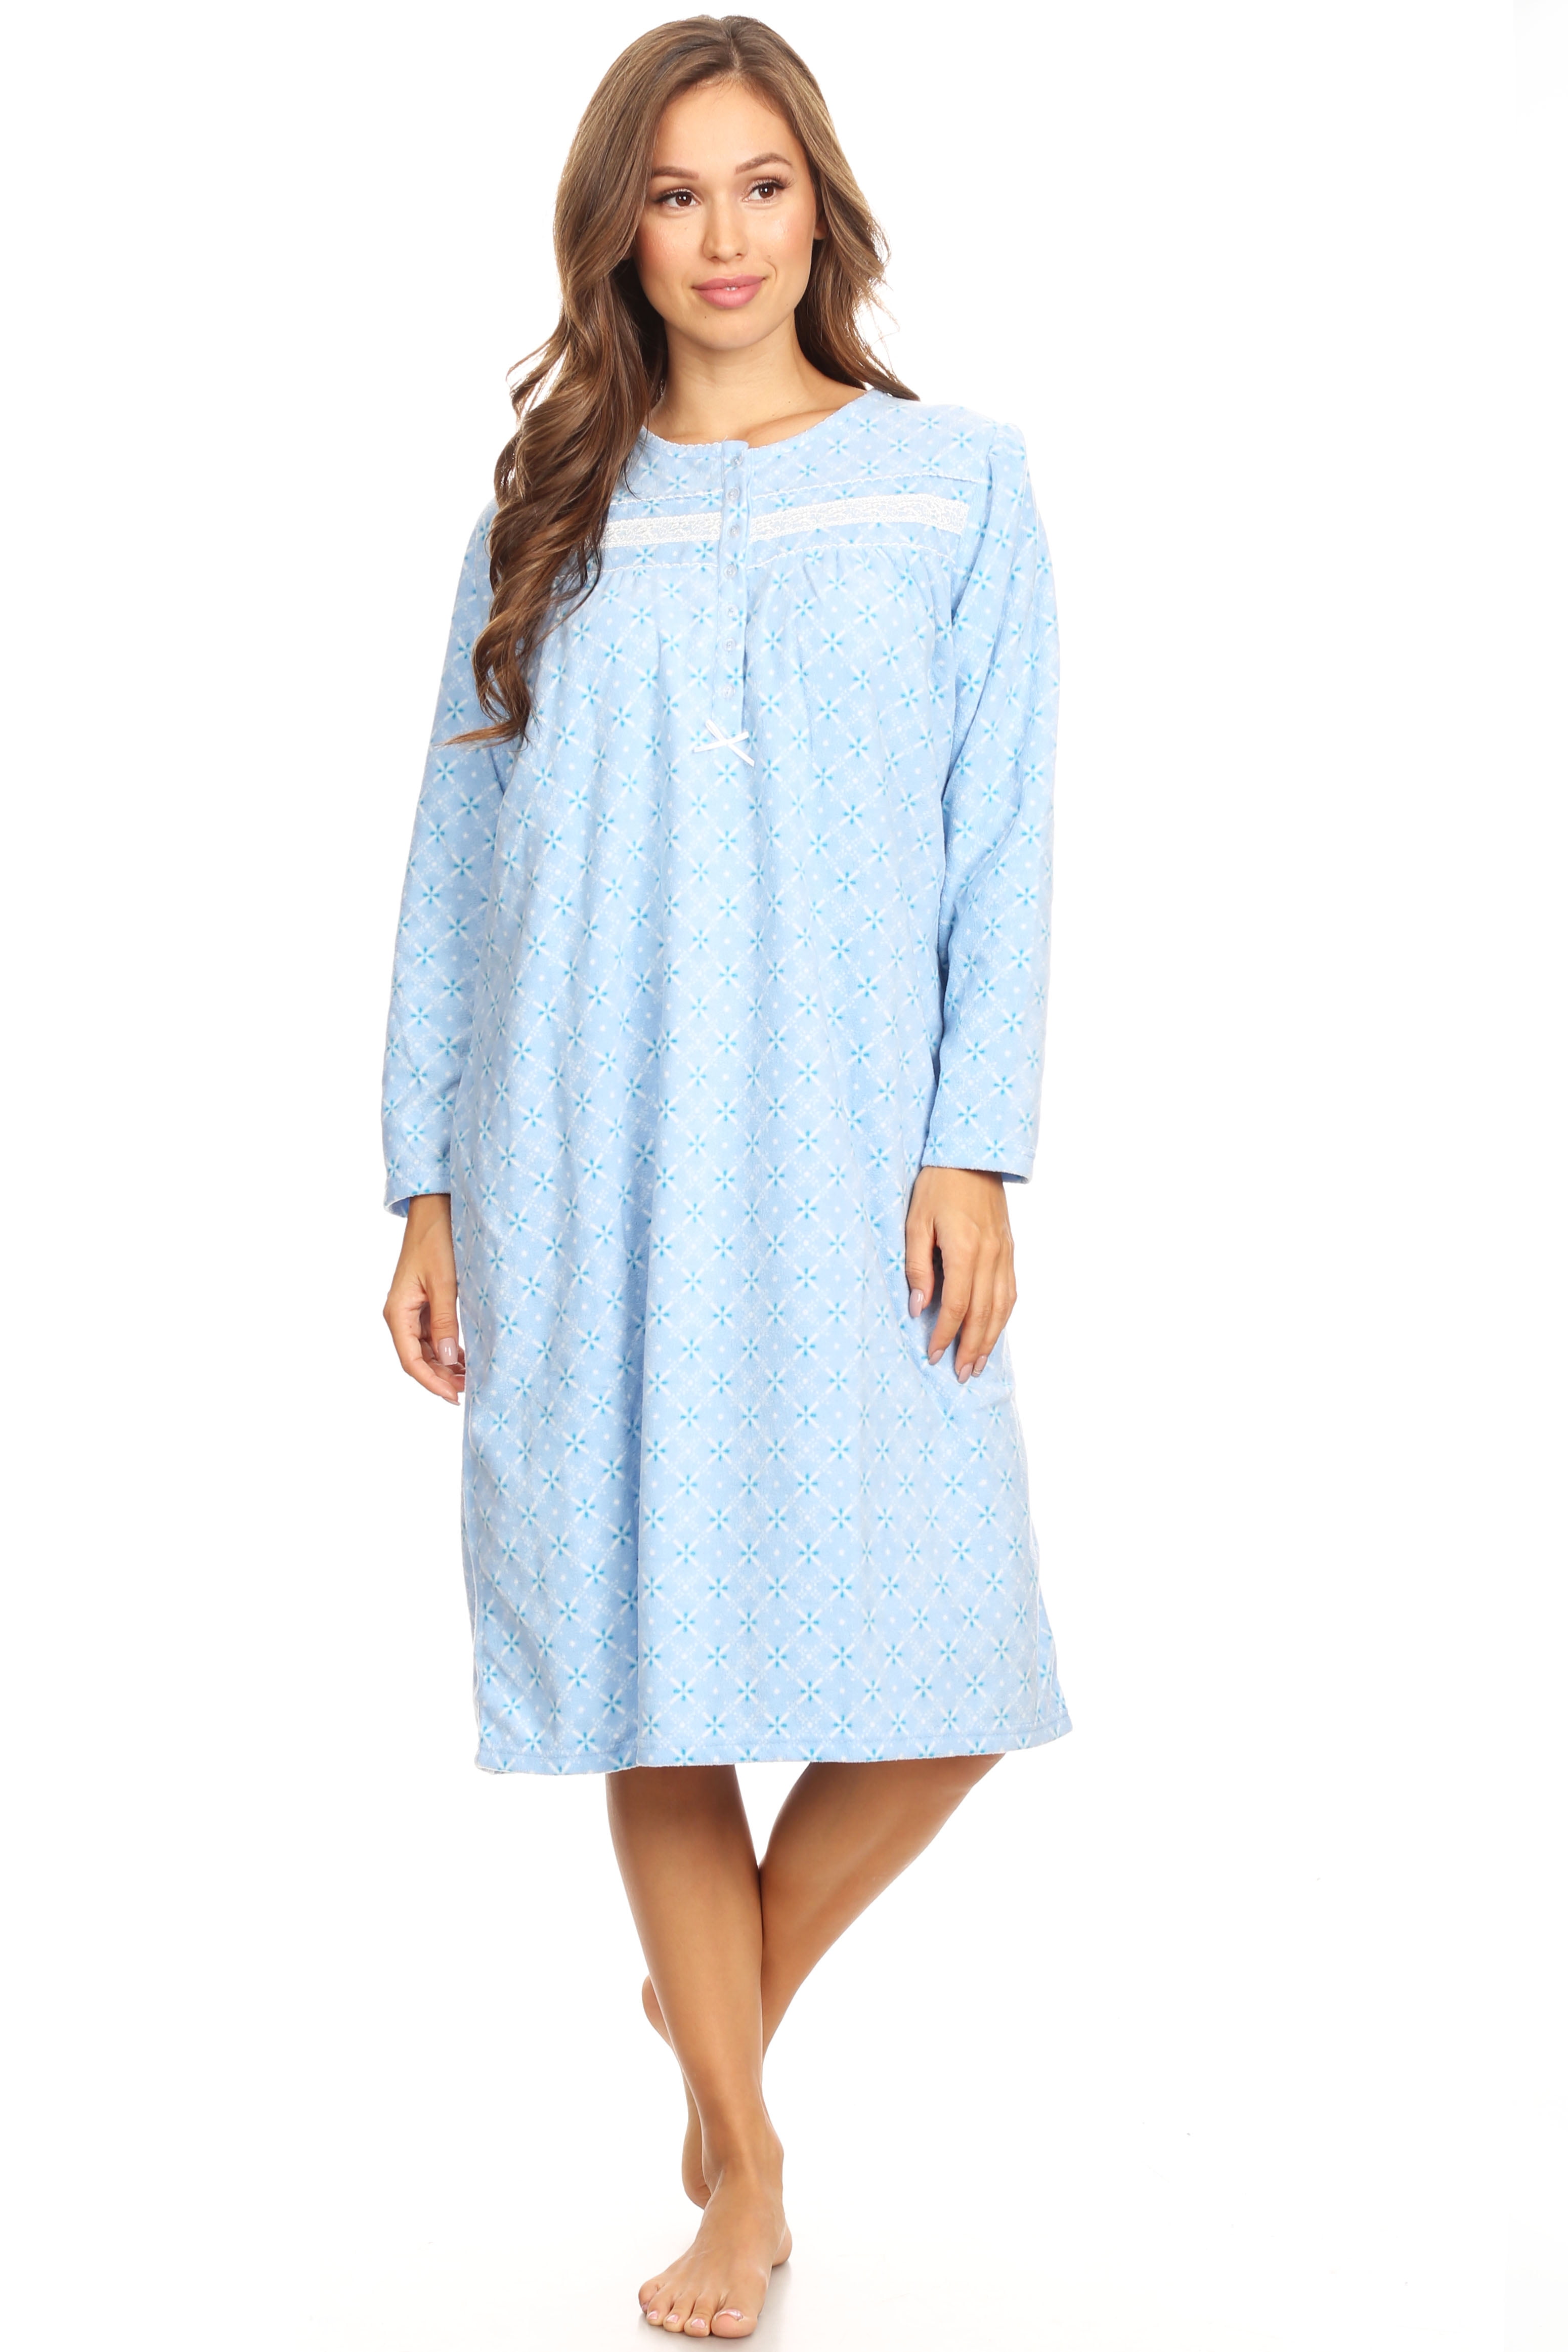 Lati Fashion Fleece Women Nightgown Sleepwear Pajamas Female Long Sleeve  Sleep Dress Nightshirt Blue 1X